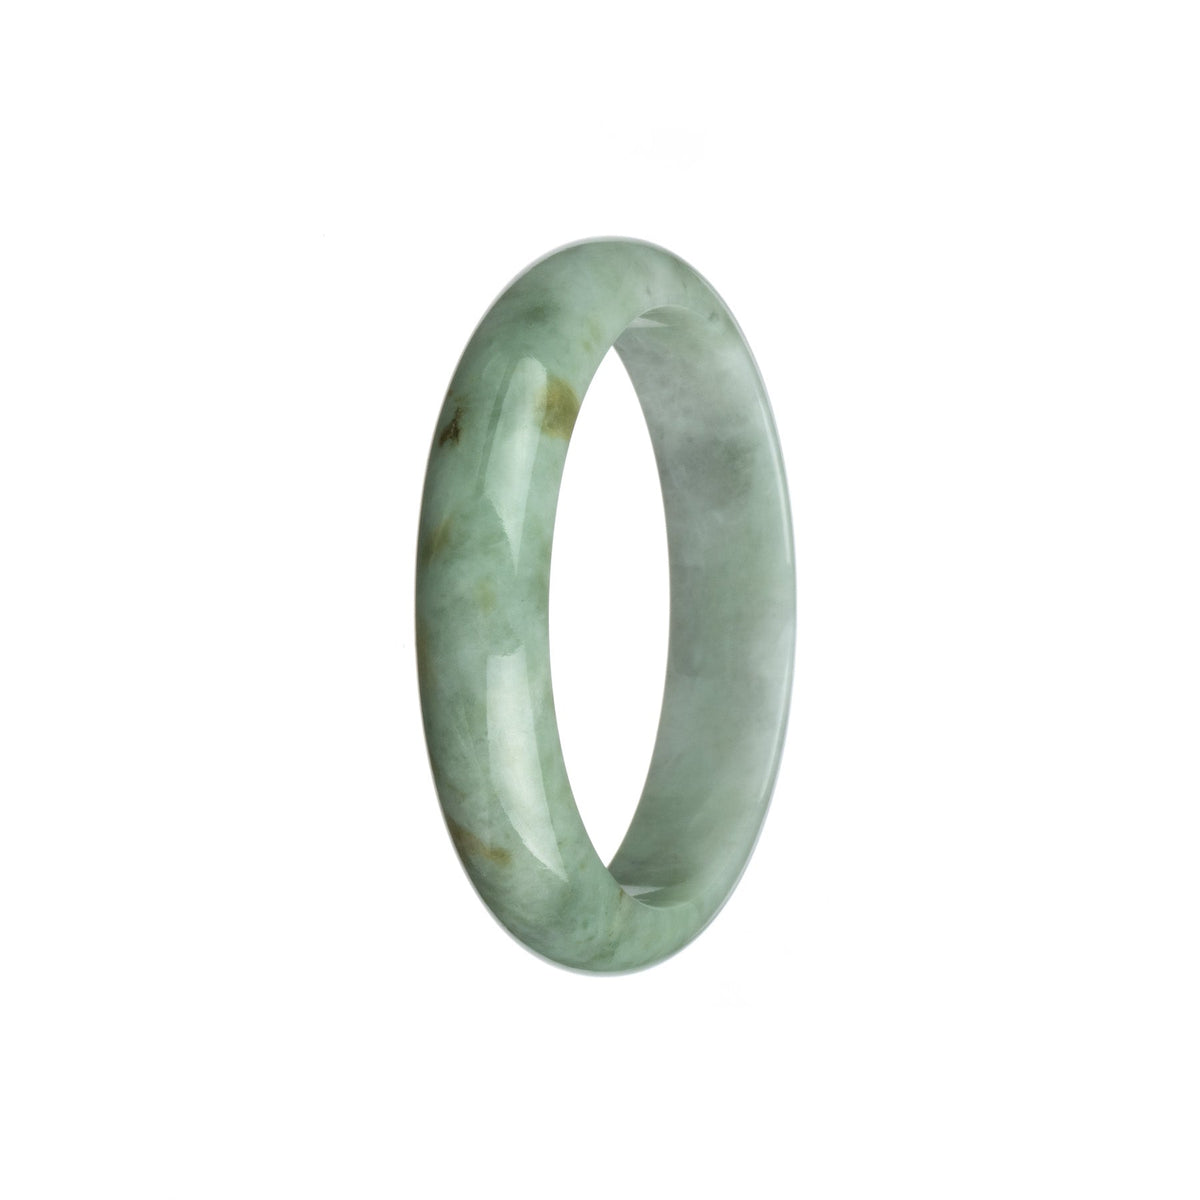 Genuine Type A Green with White Burma Jade Bracelet - 56mm Half Moon